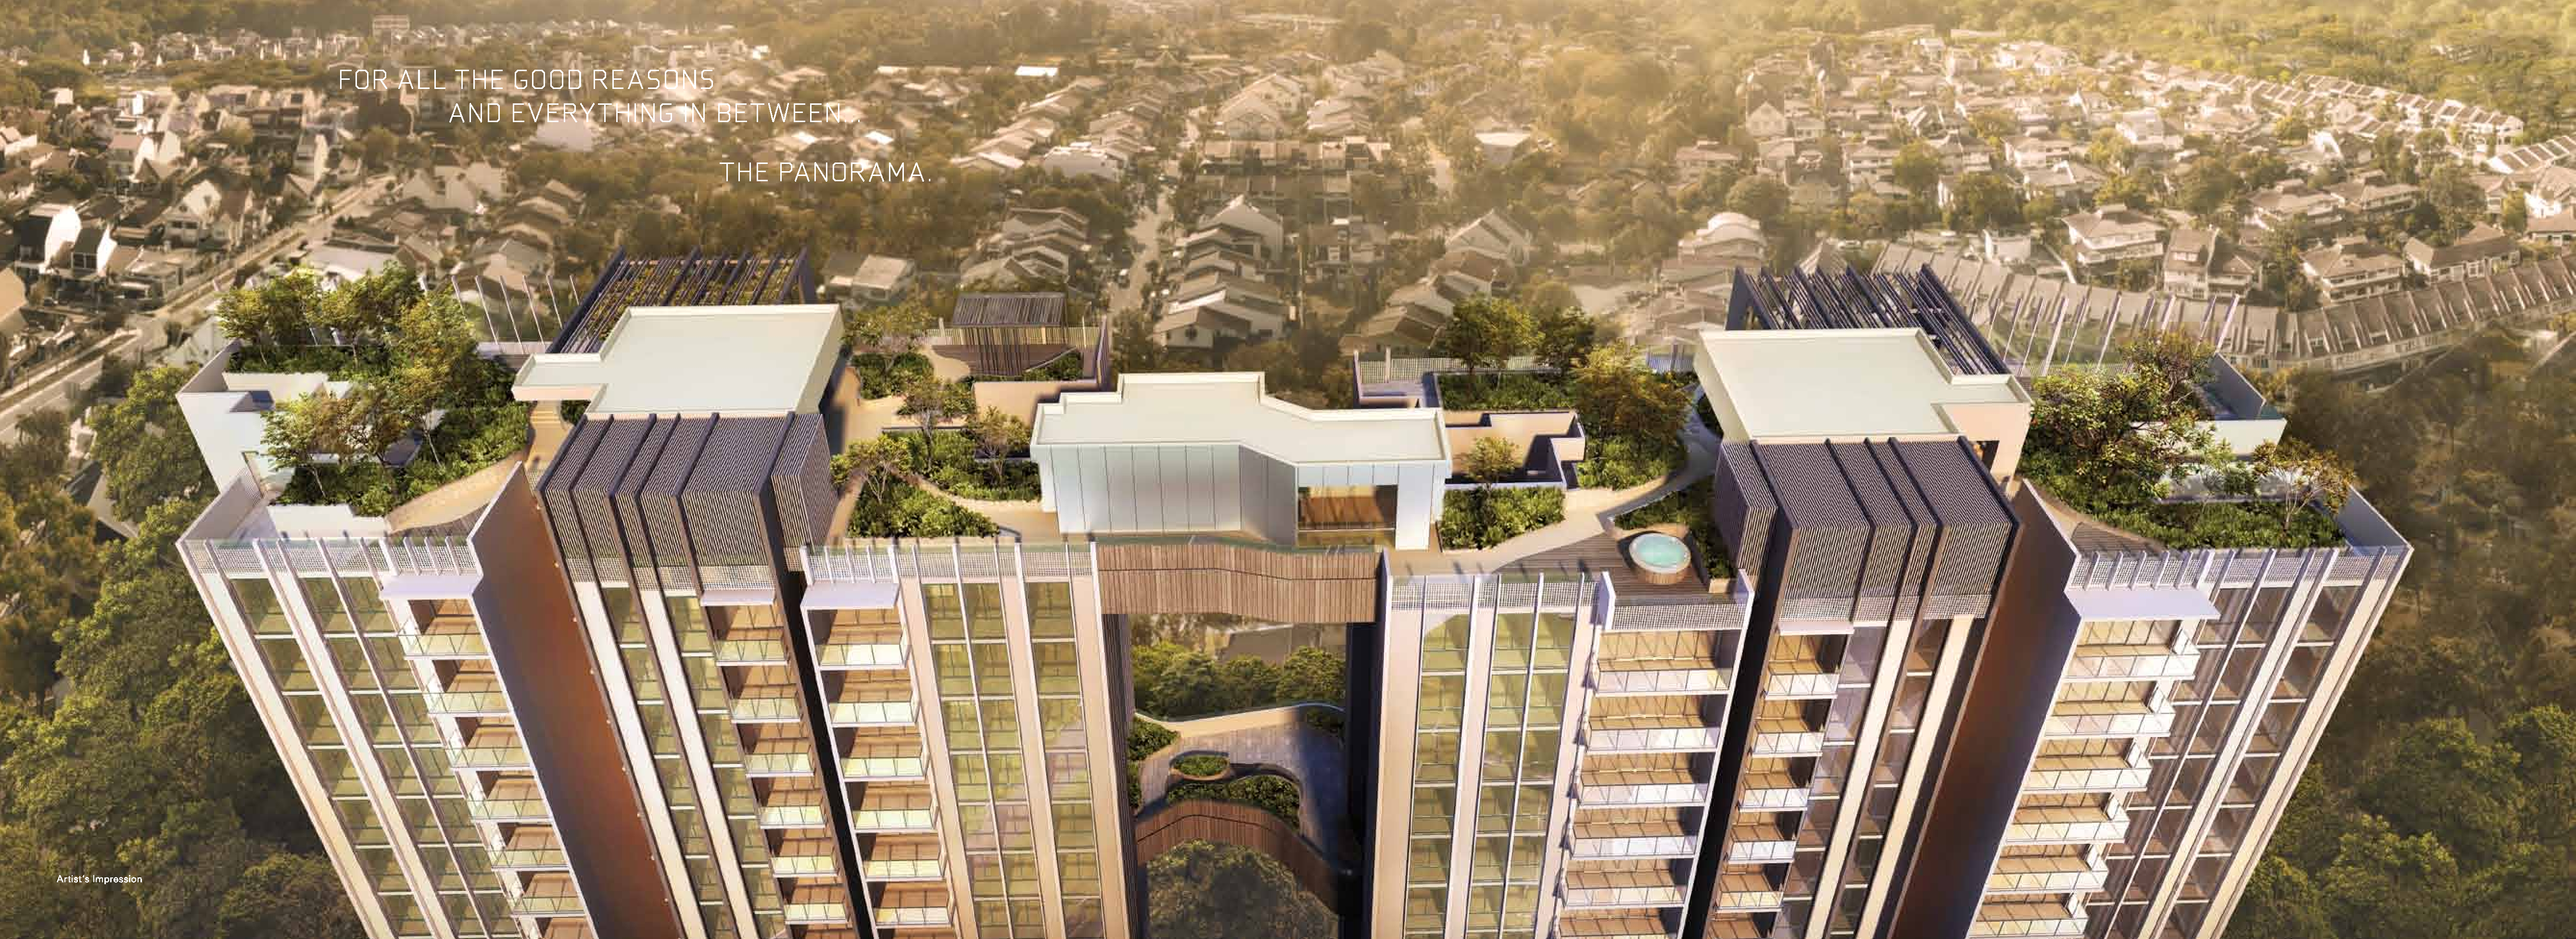 The Panorama at Ang Mo Kio - Singapore Property Review - FengShui ...